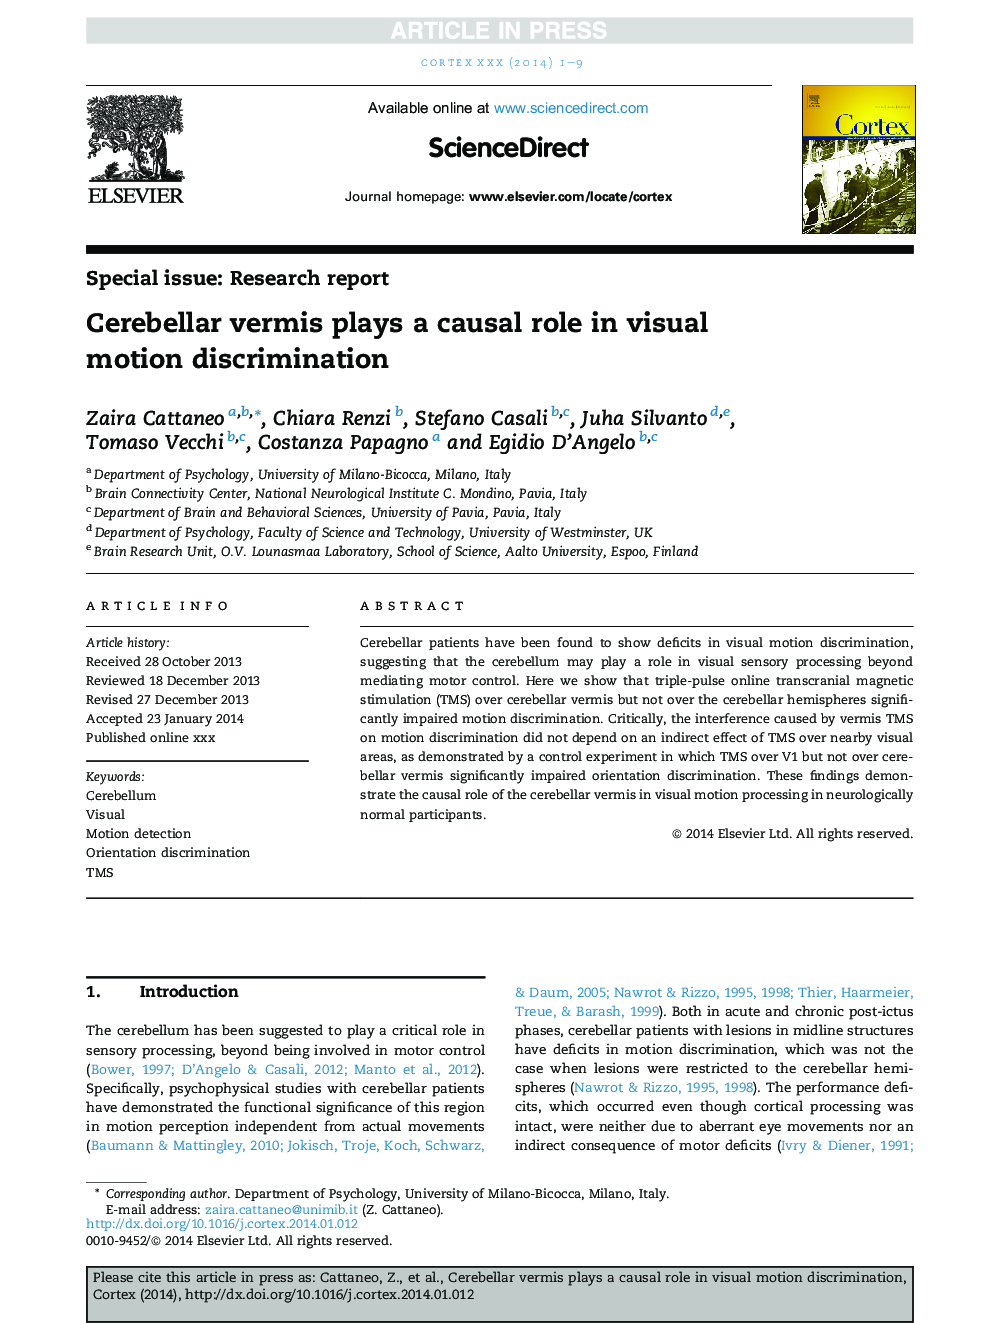 Cerebellar vermis plays a causal role in visual motion discrimination